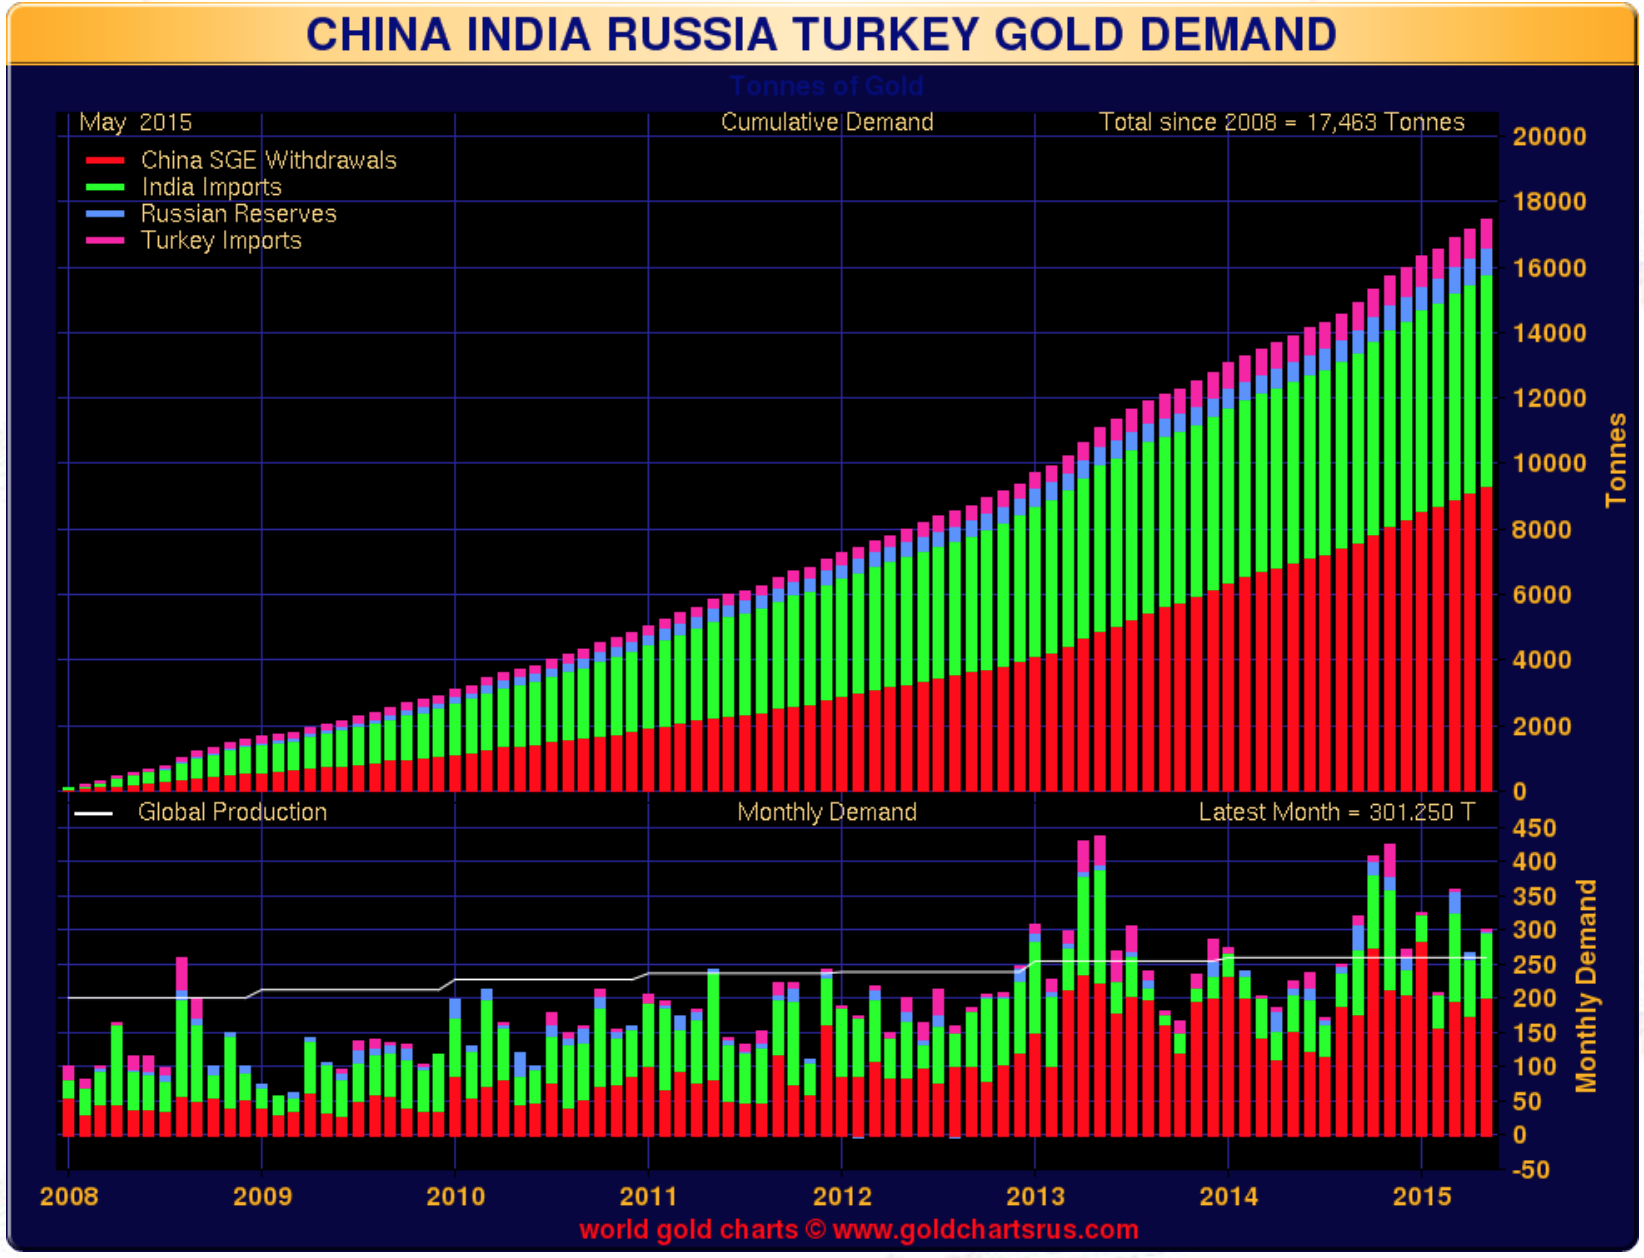 Demande d'or - Chine Inde Russie et Turquie